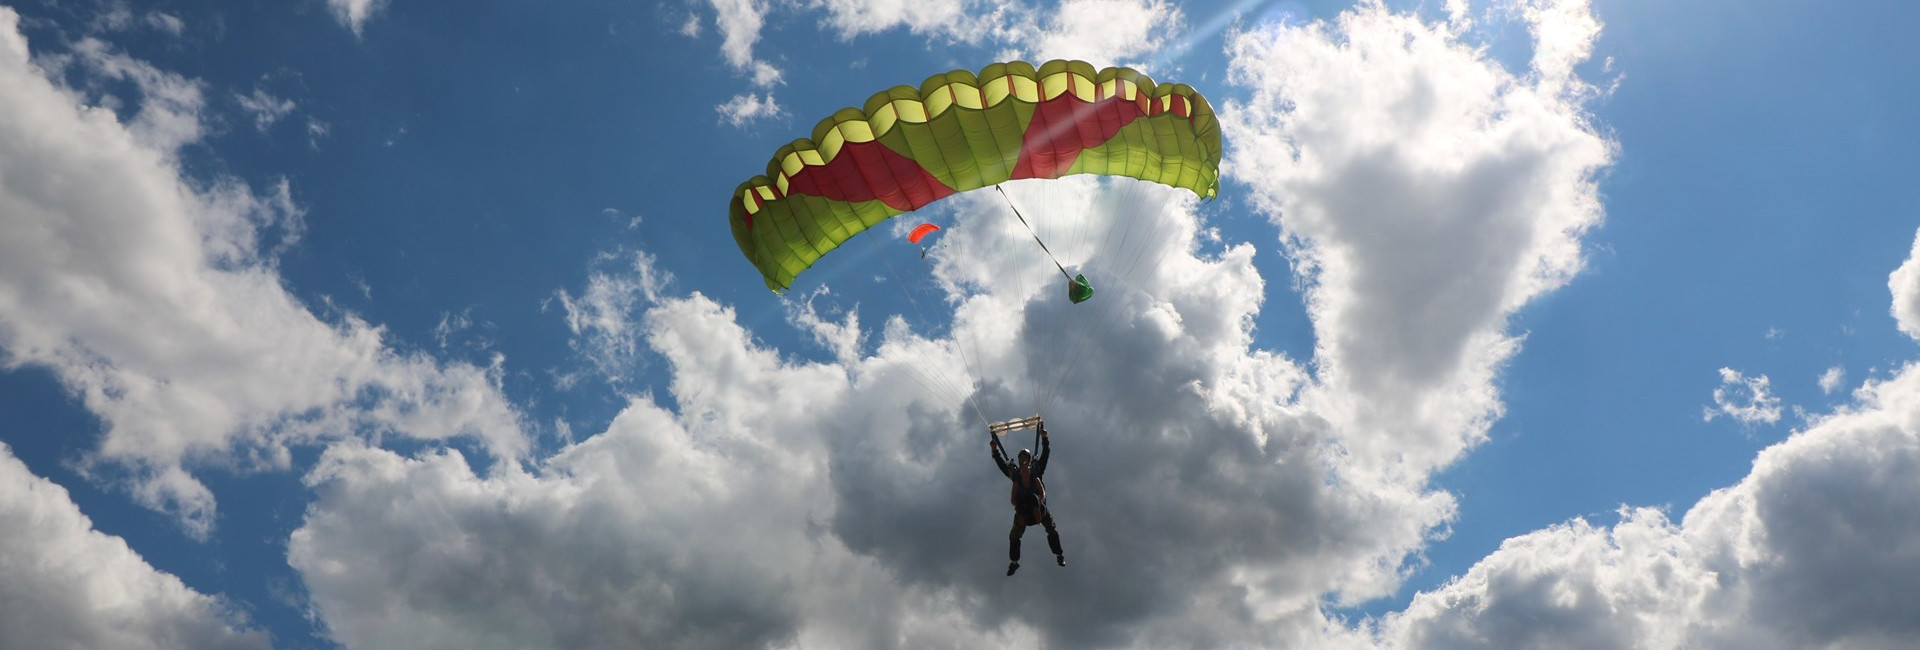 saut parachute 07